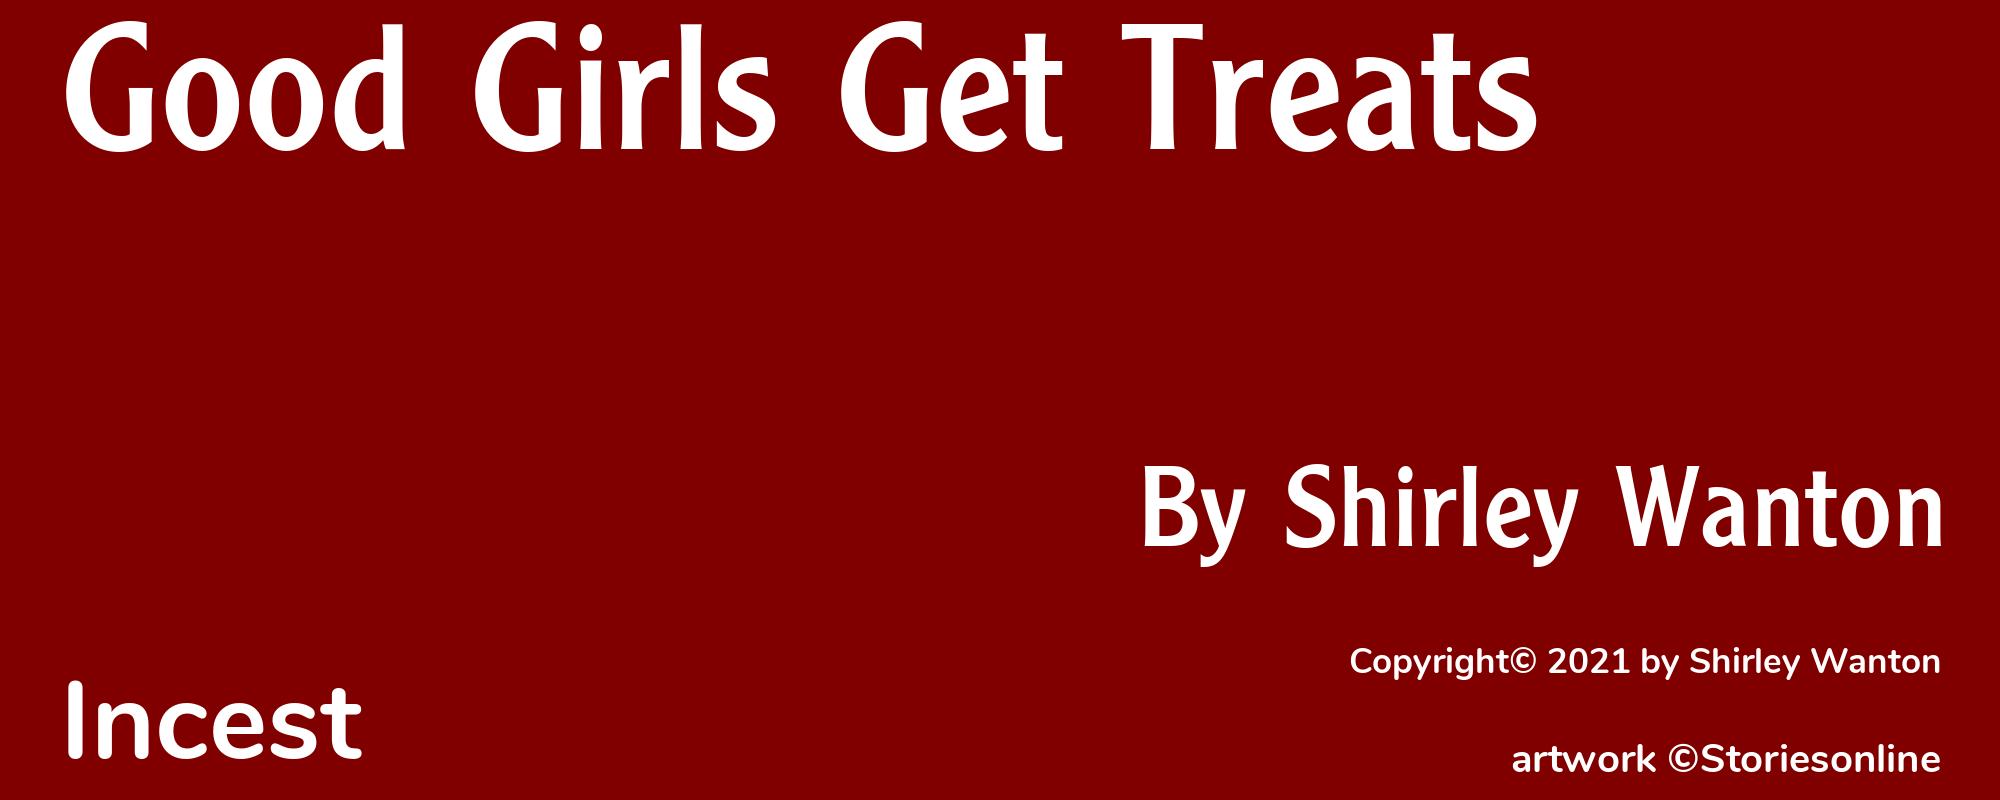 Good Girls Get Treats - Cover